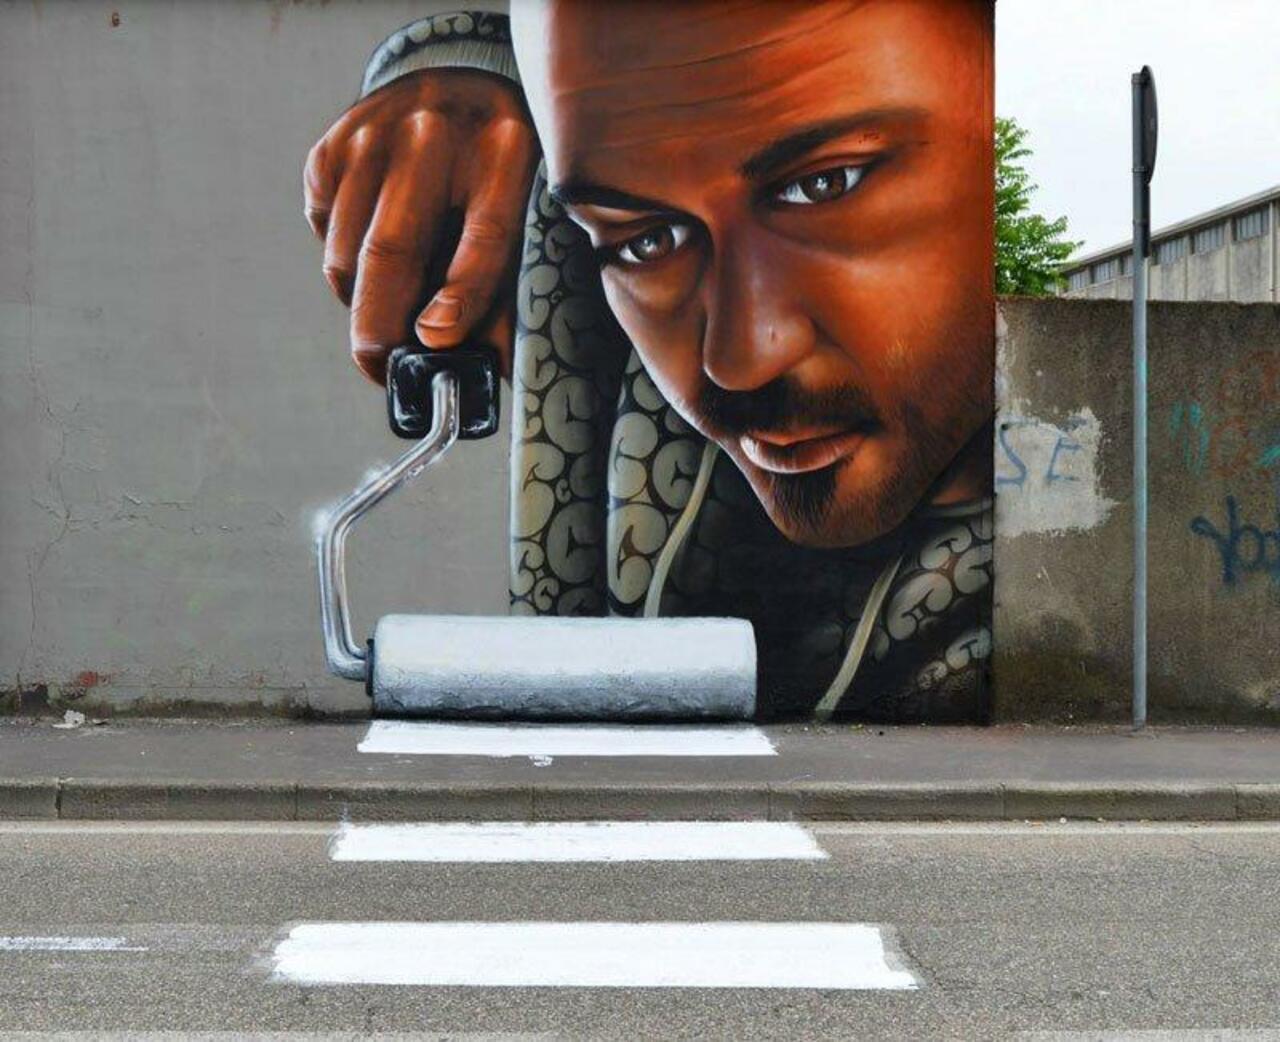 RT @roysunny15: Rolling through the streets. #art #artist #aerosol #urban #mural #graffiti #streetphotography #artoftheday #handmade http://t.co/Y3DcdYtCtz